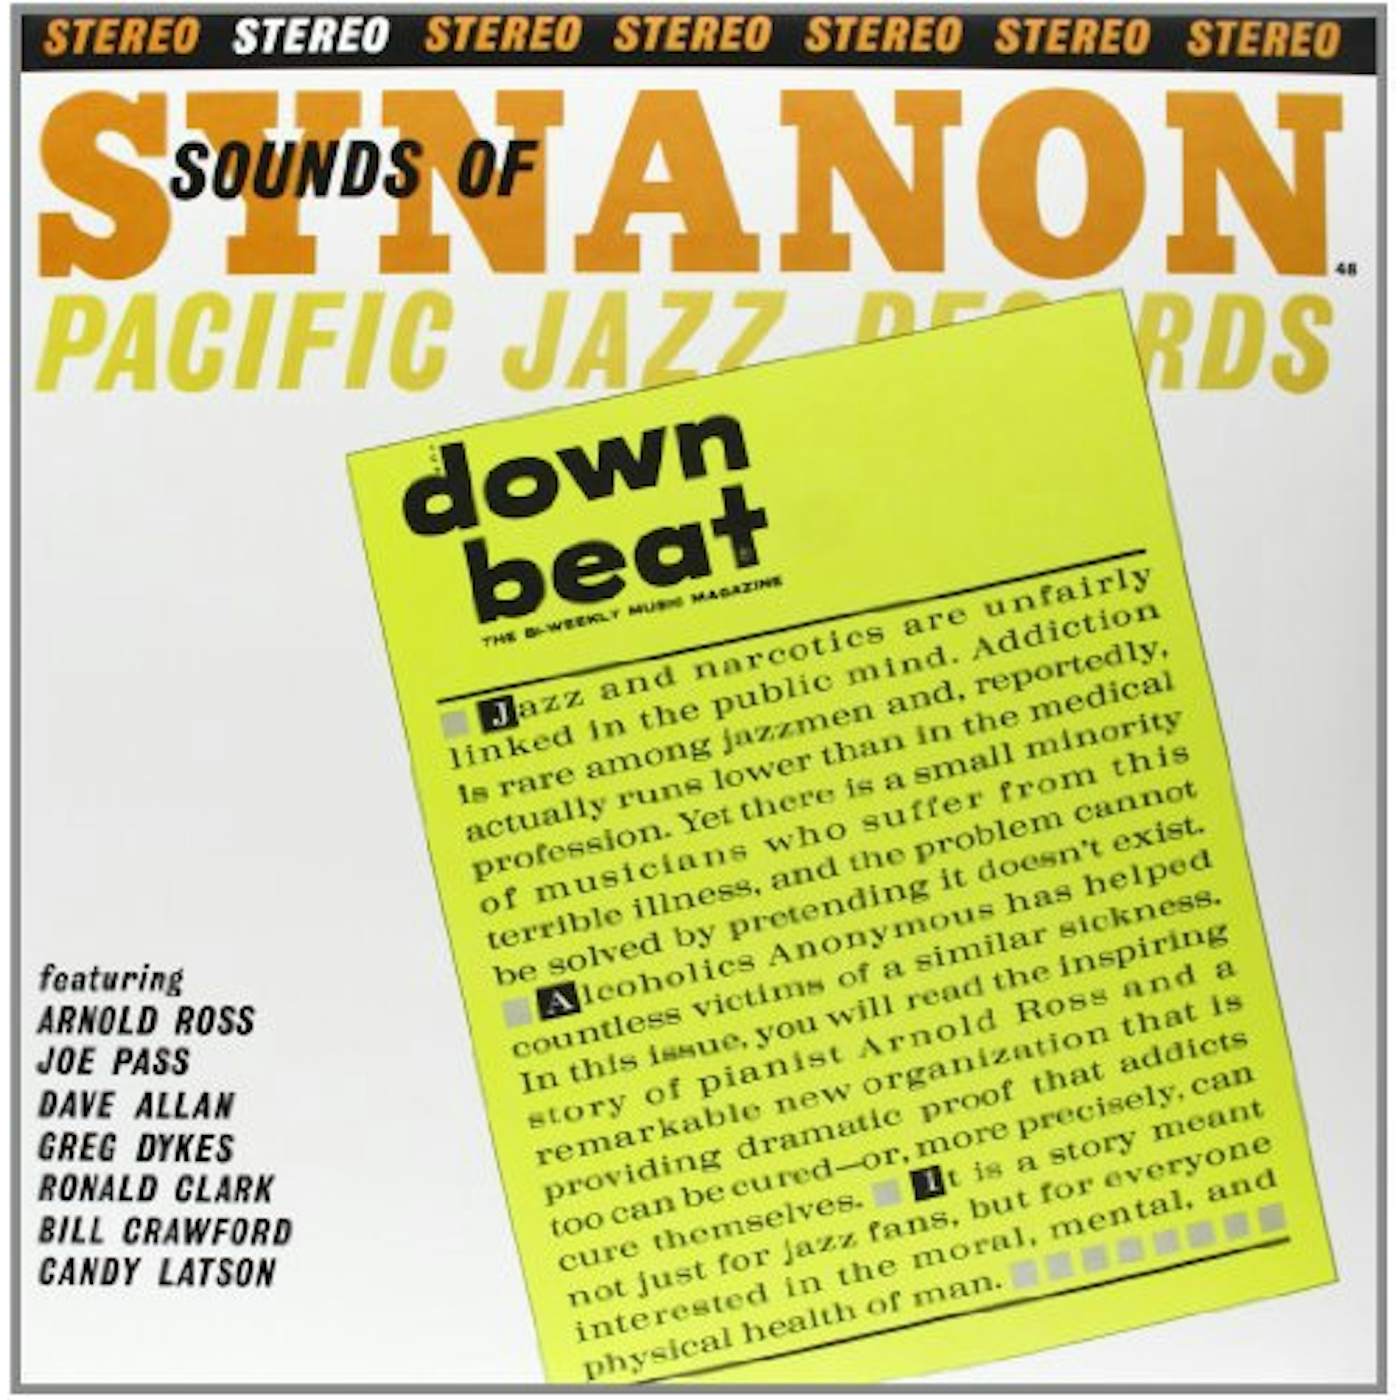 Joe Pass Sounds Of Synanon Vinyl Record